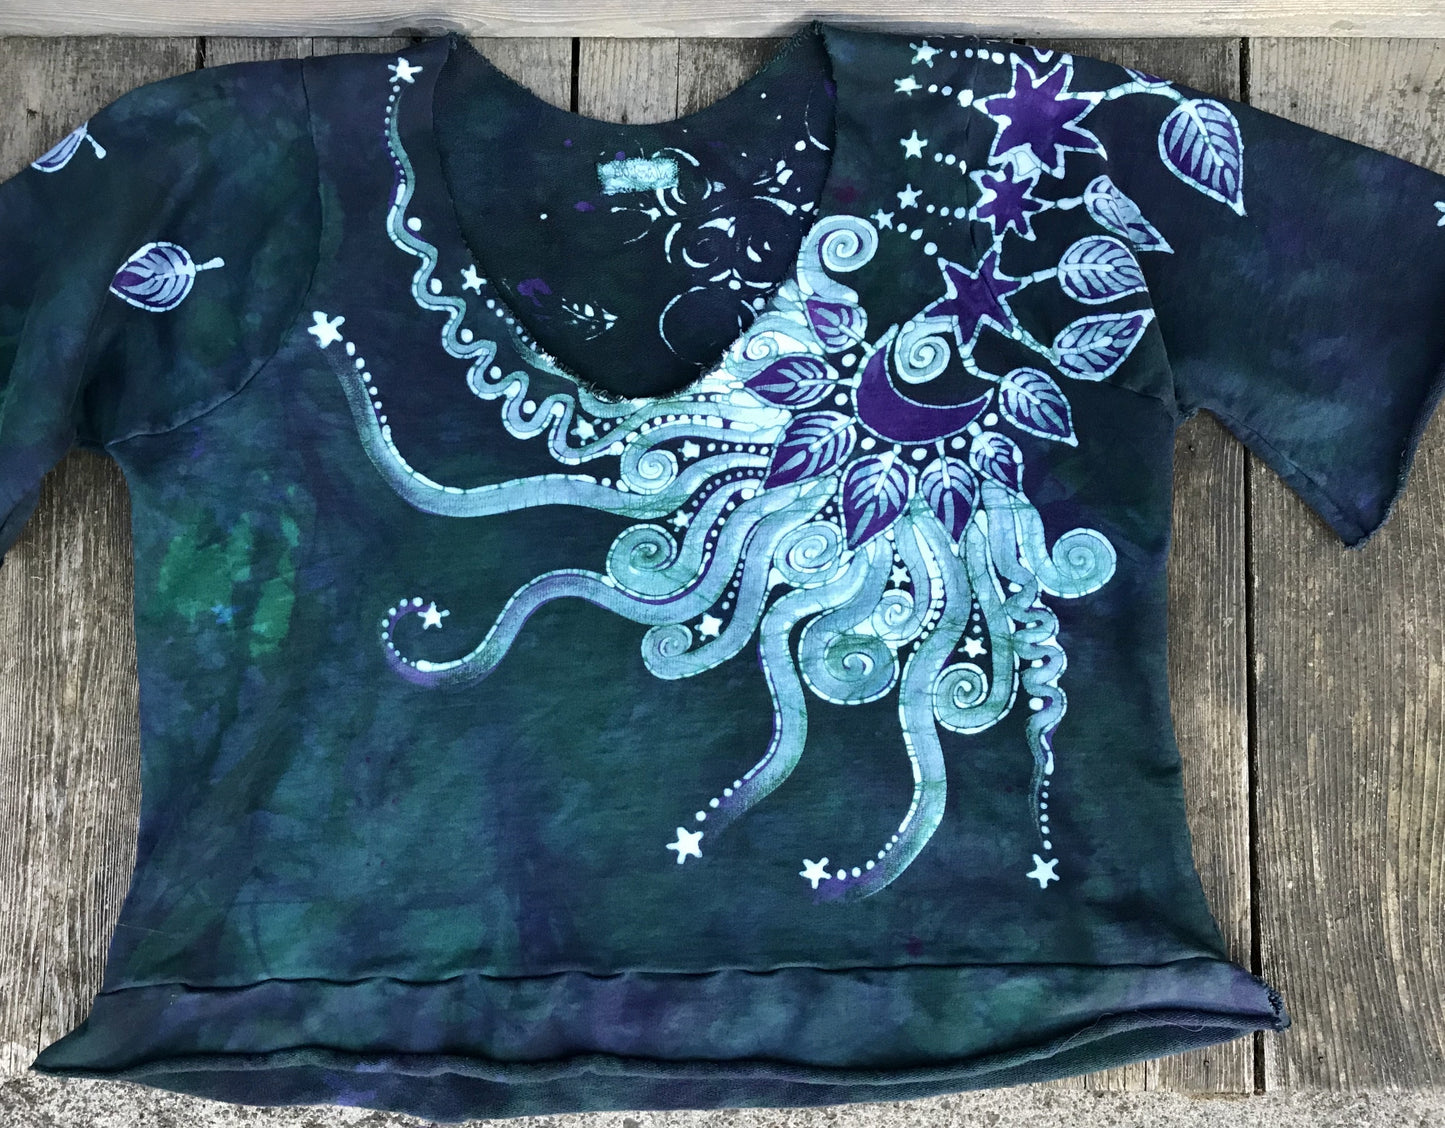 Teal Purple Moon Organic Cotton Handmade Batik Top, Size 2X Plus Batik Dresses Batikwalla 